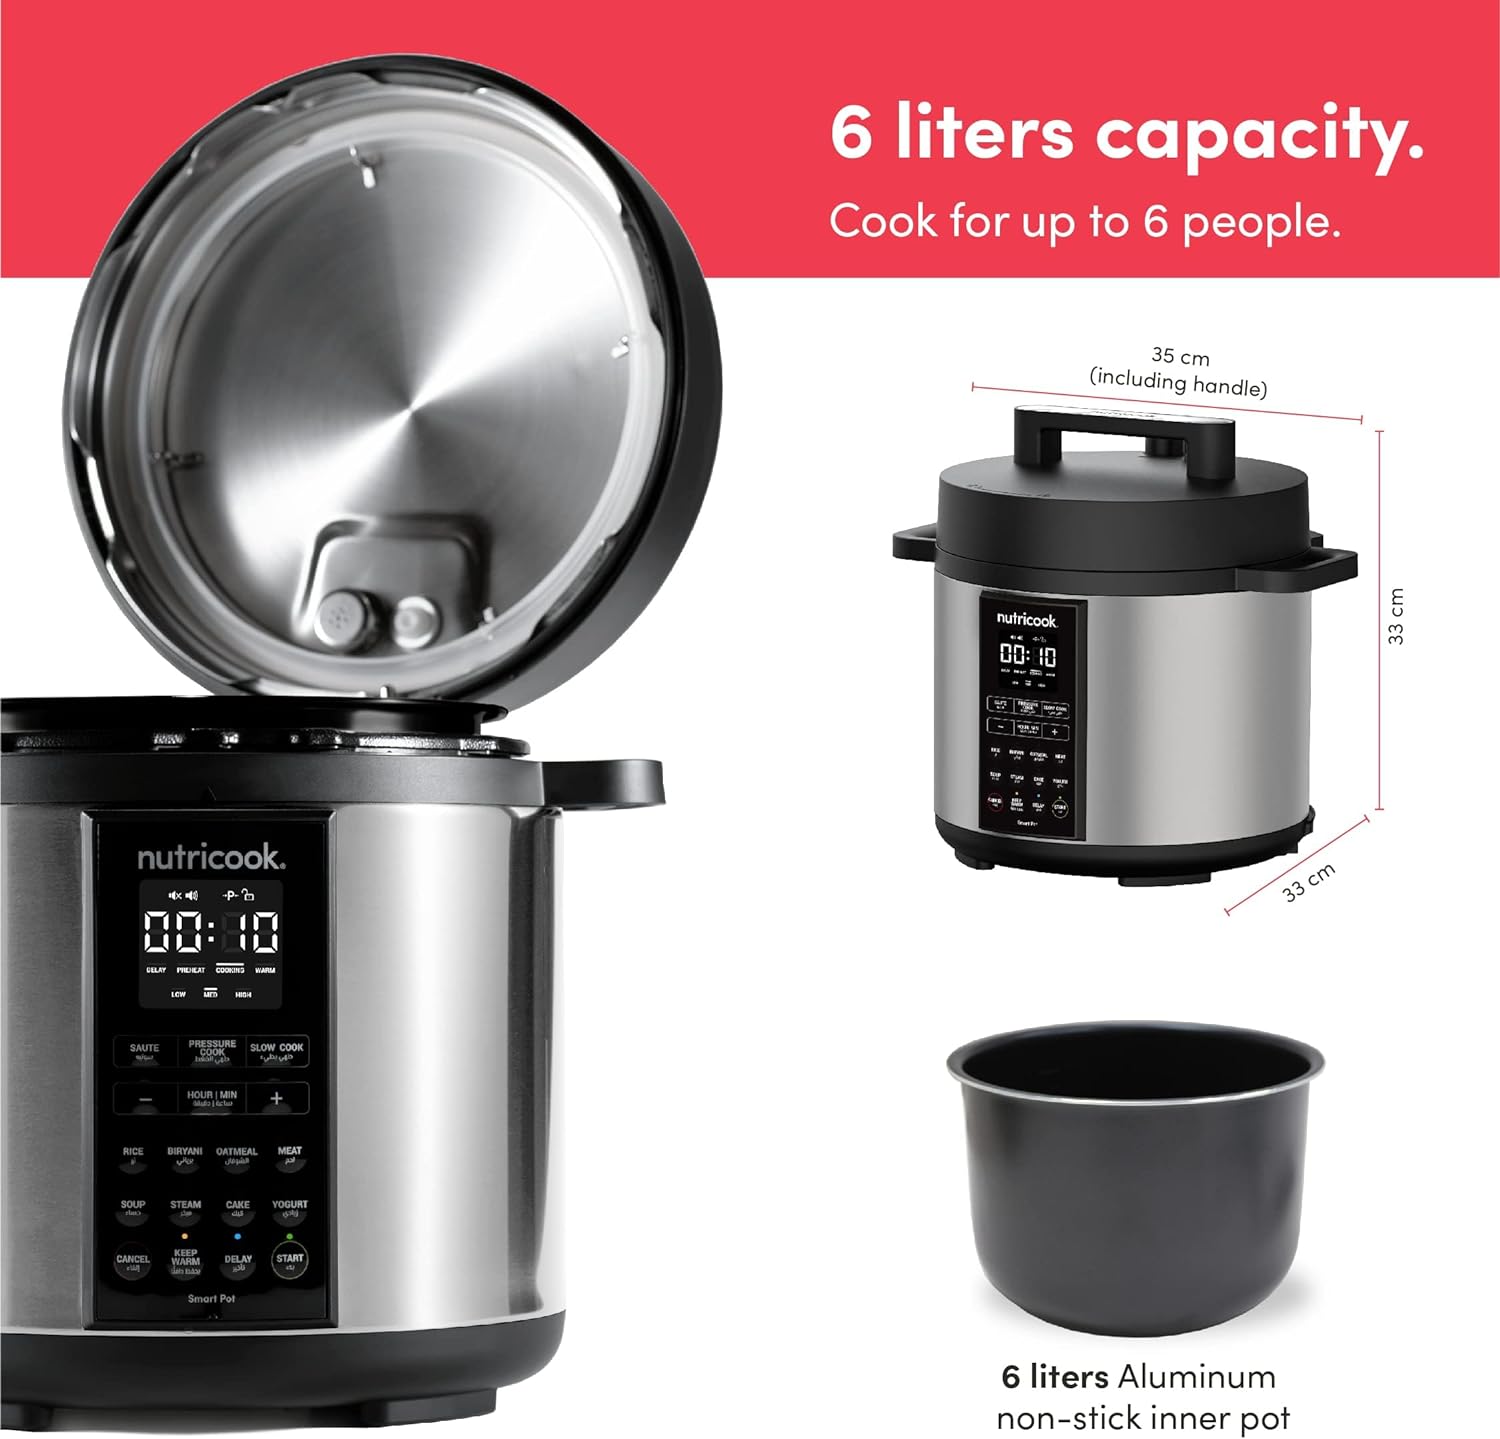 Nutricook Smart Pot 2 / 8L / Electric Pressure Cooker - Silver